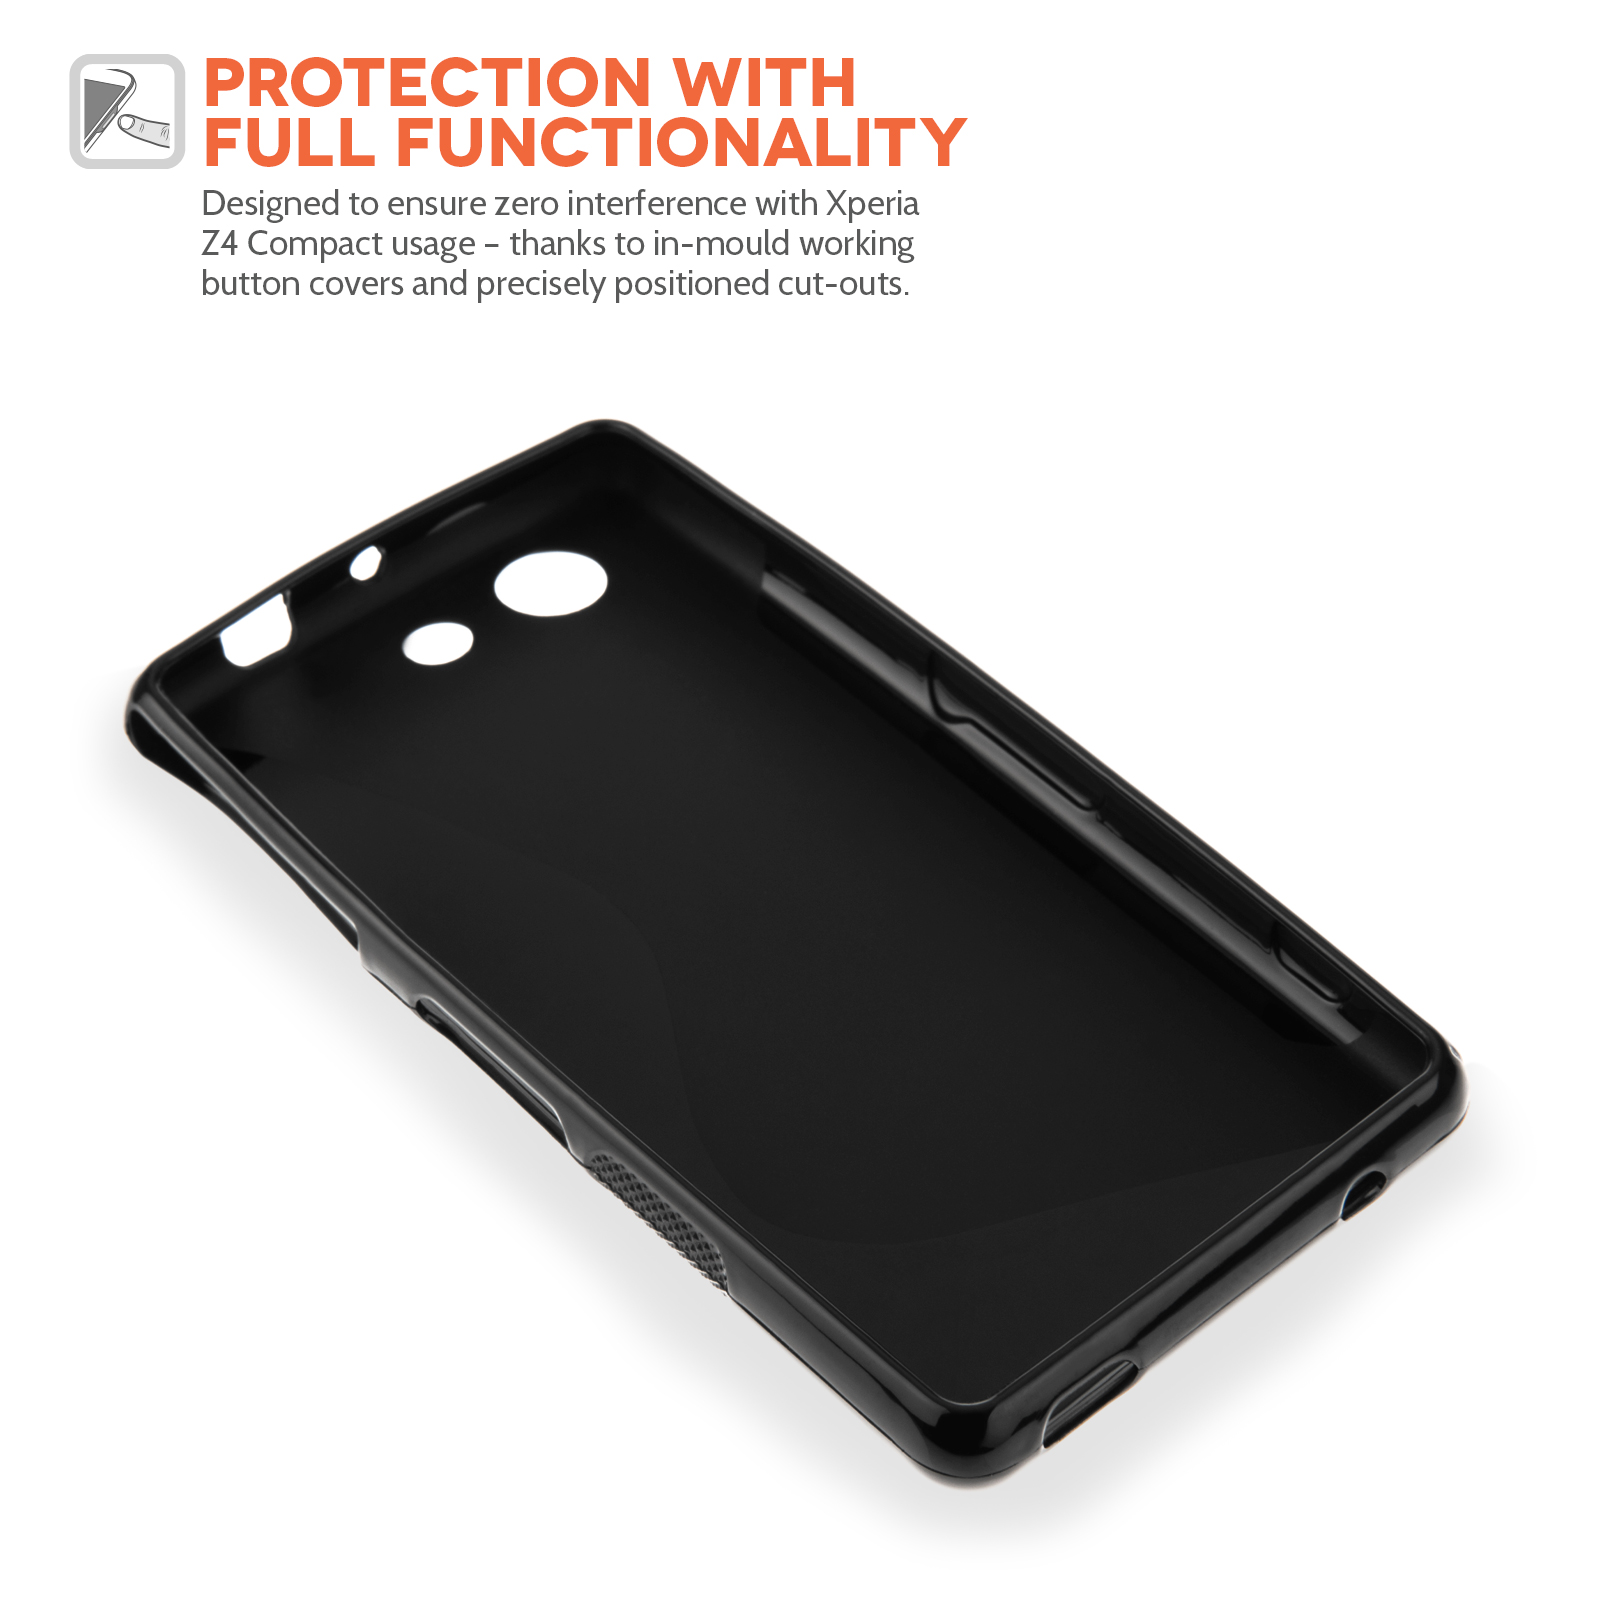 Caseflex Sony Xperia Z4 Compact Silicone Gel S-Line Case - Black